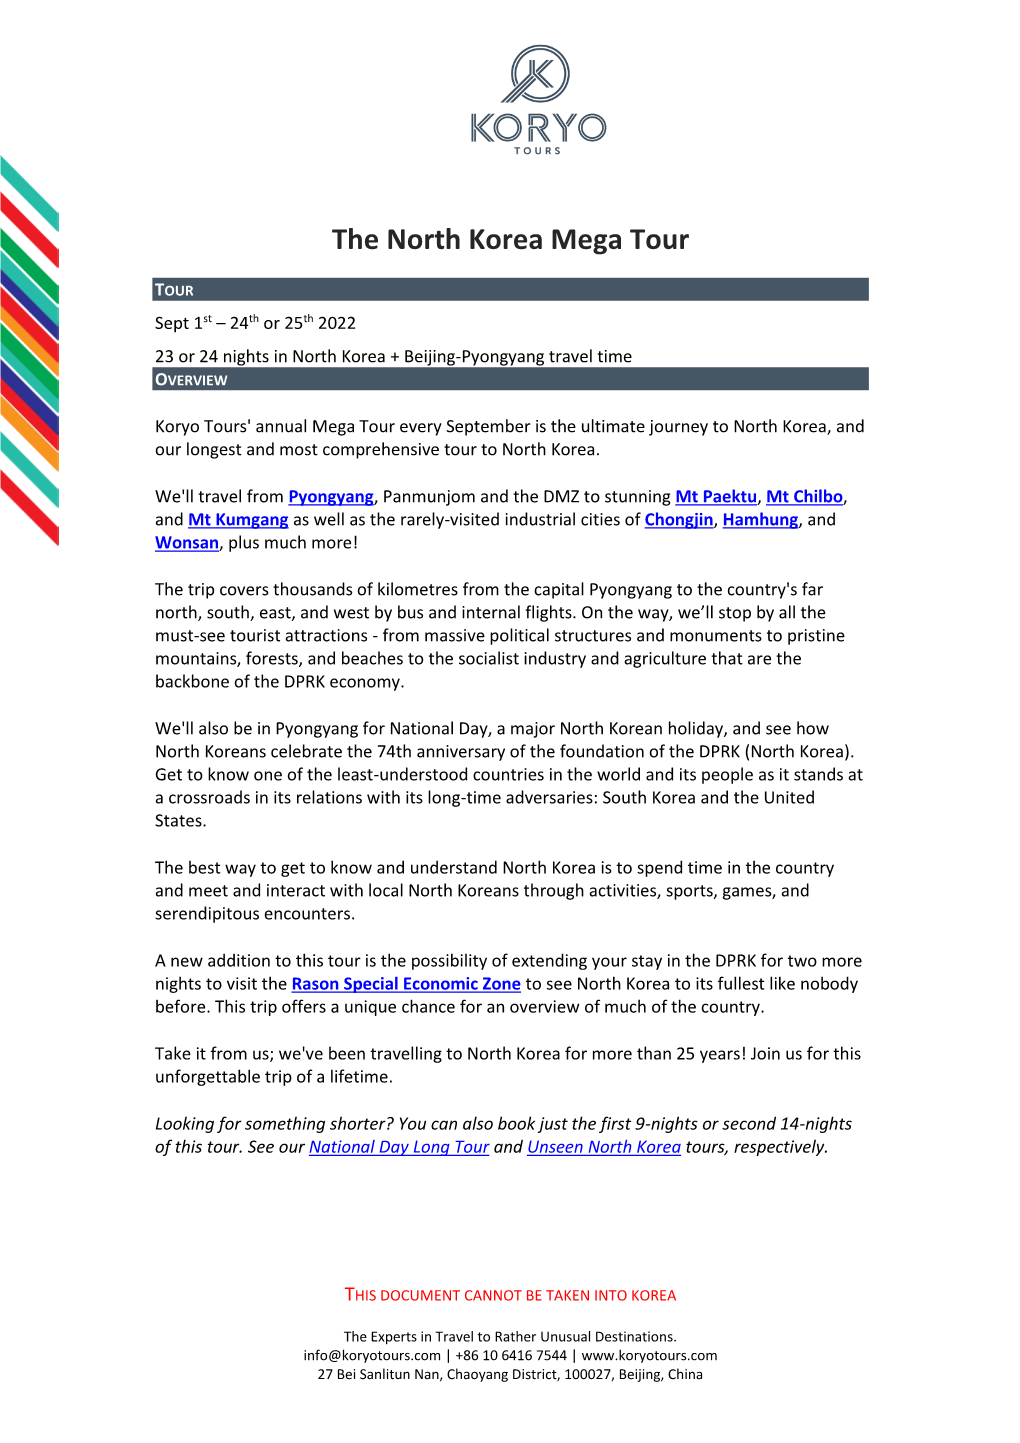 The North Korea Mega Tour